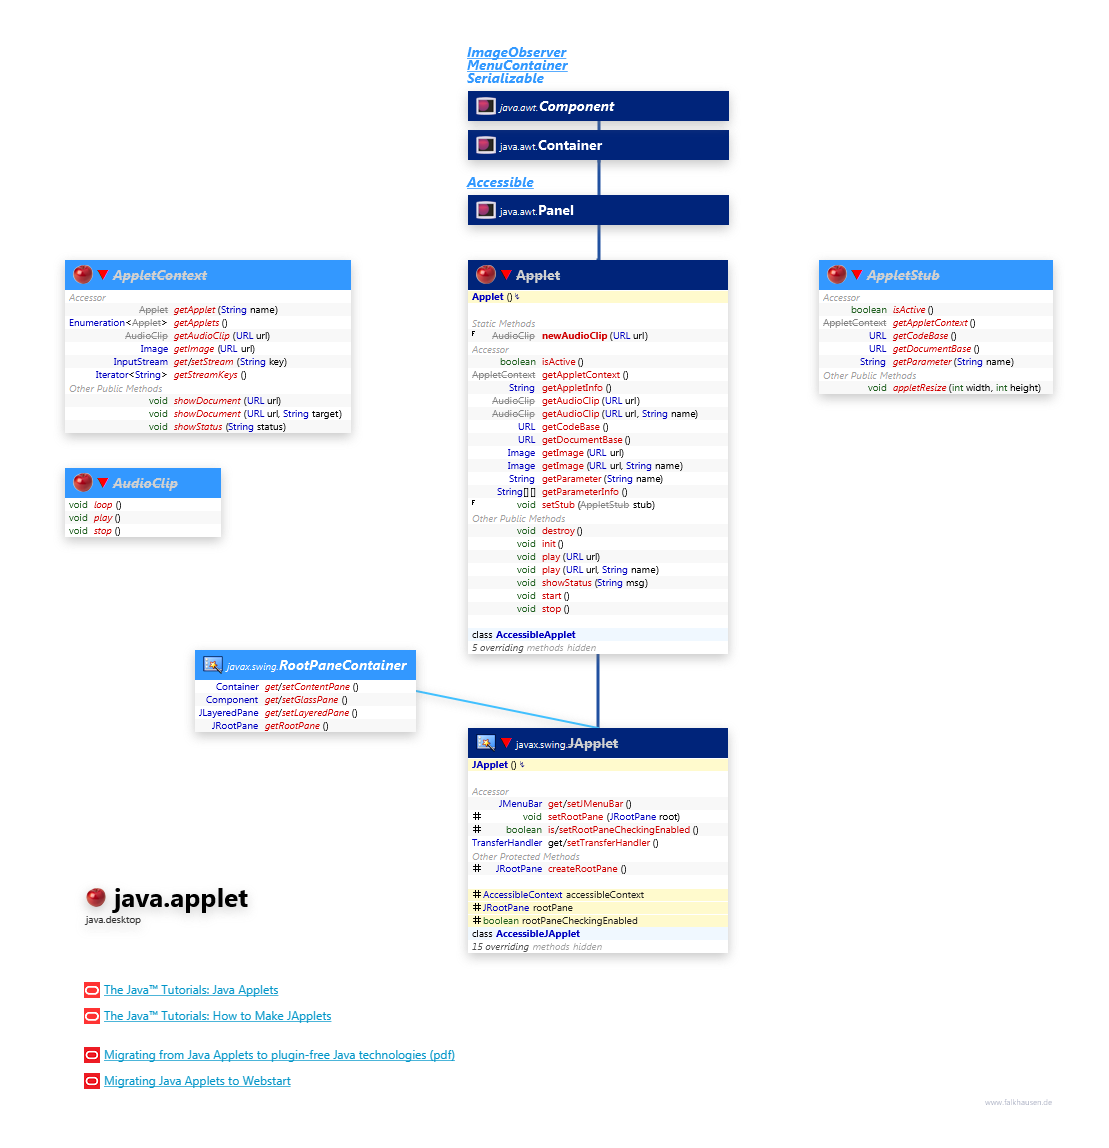 java.applet class diagram and api documentation for Java 10